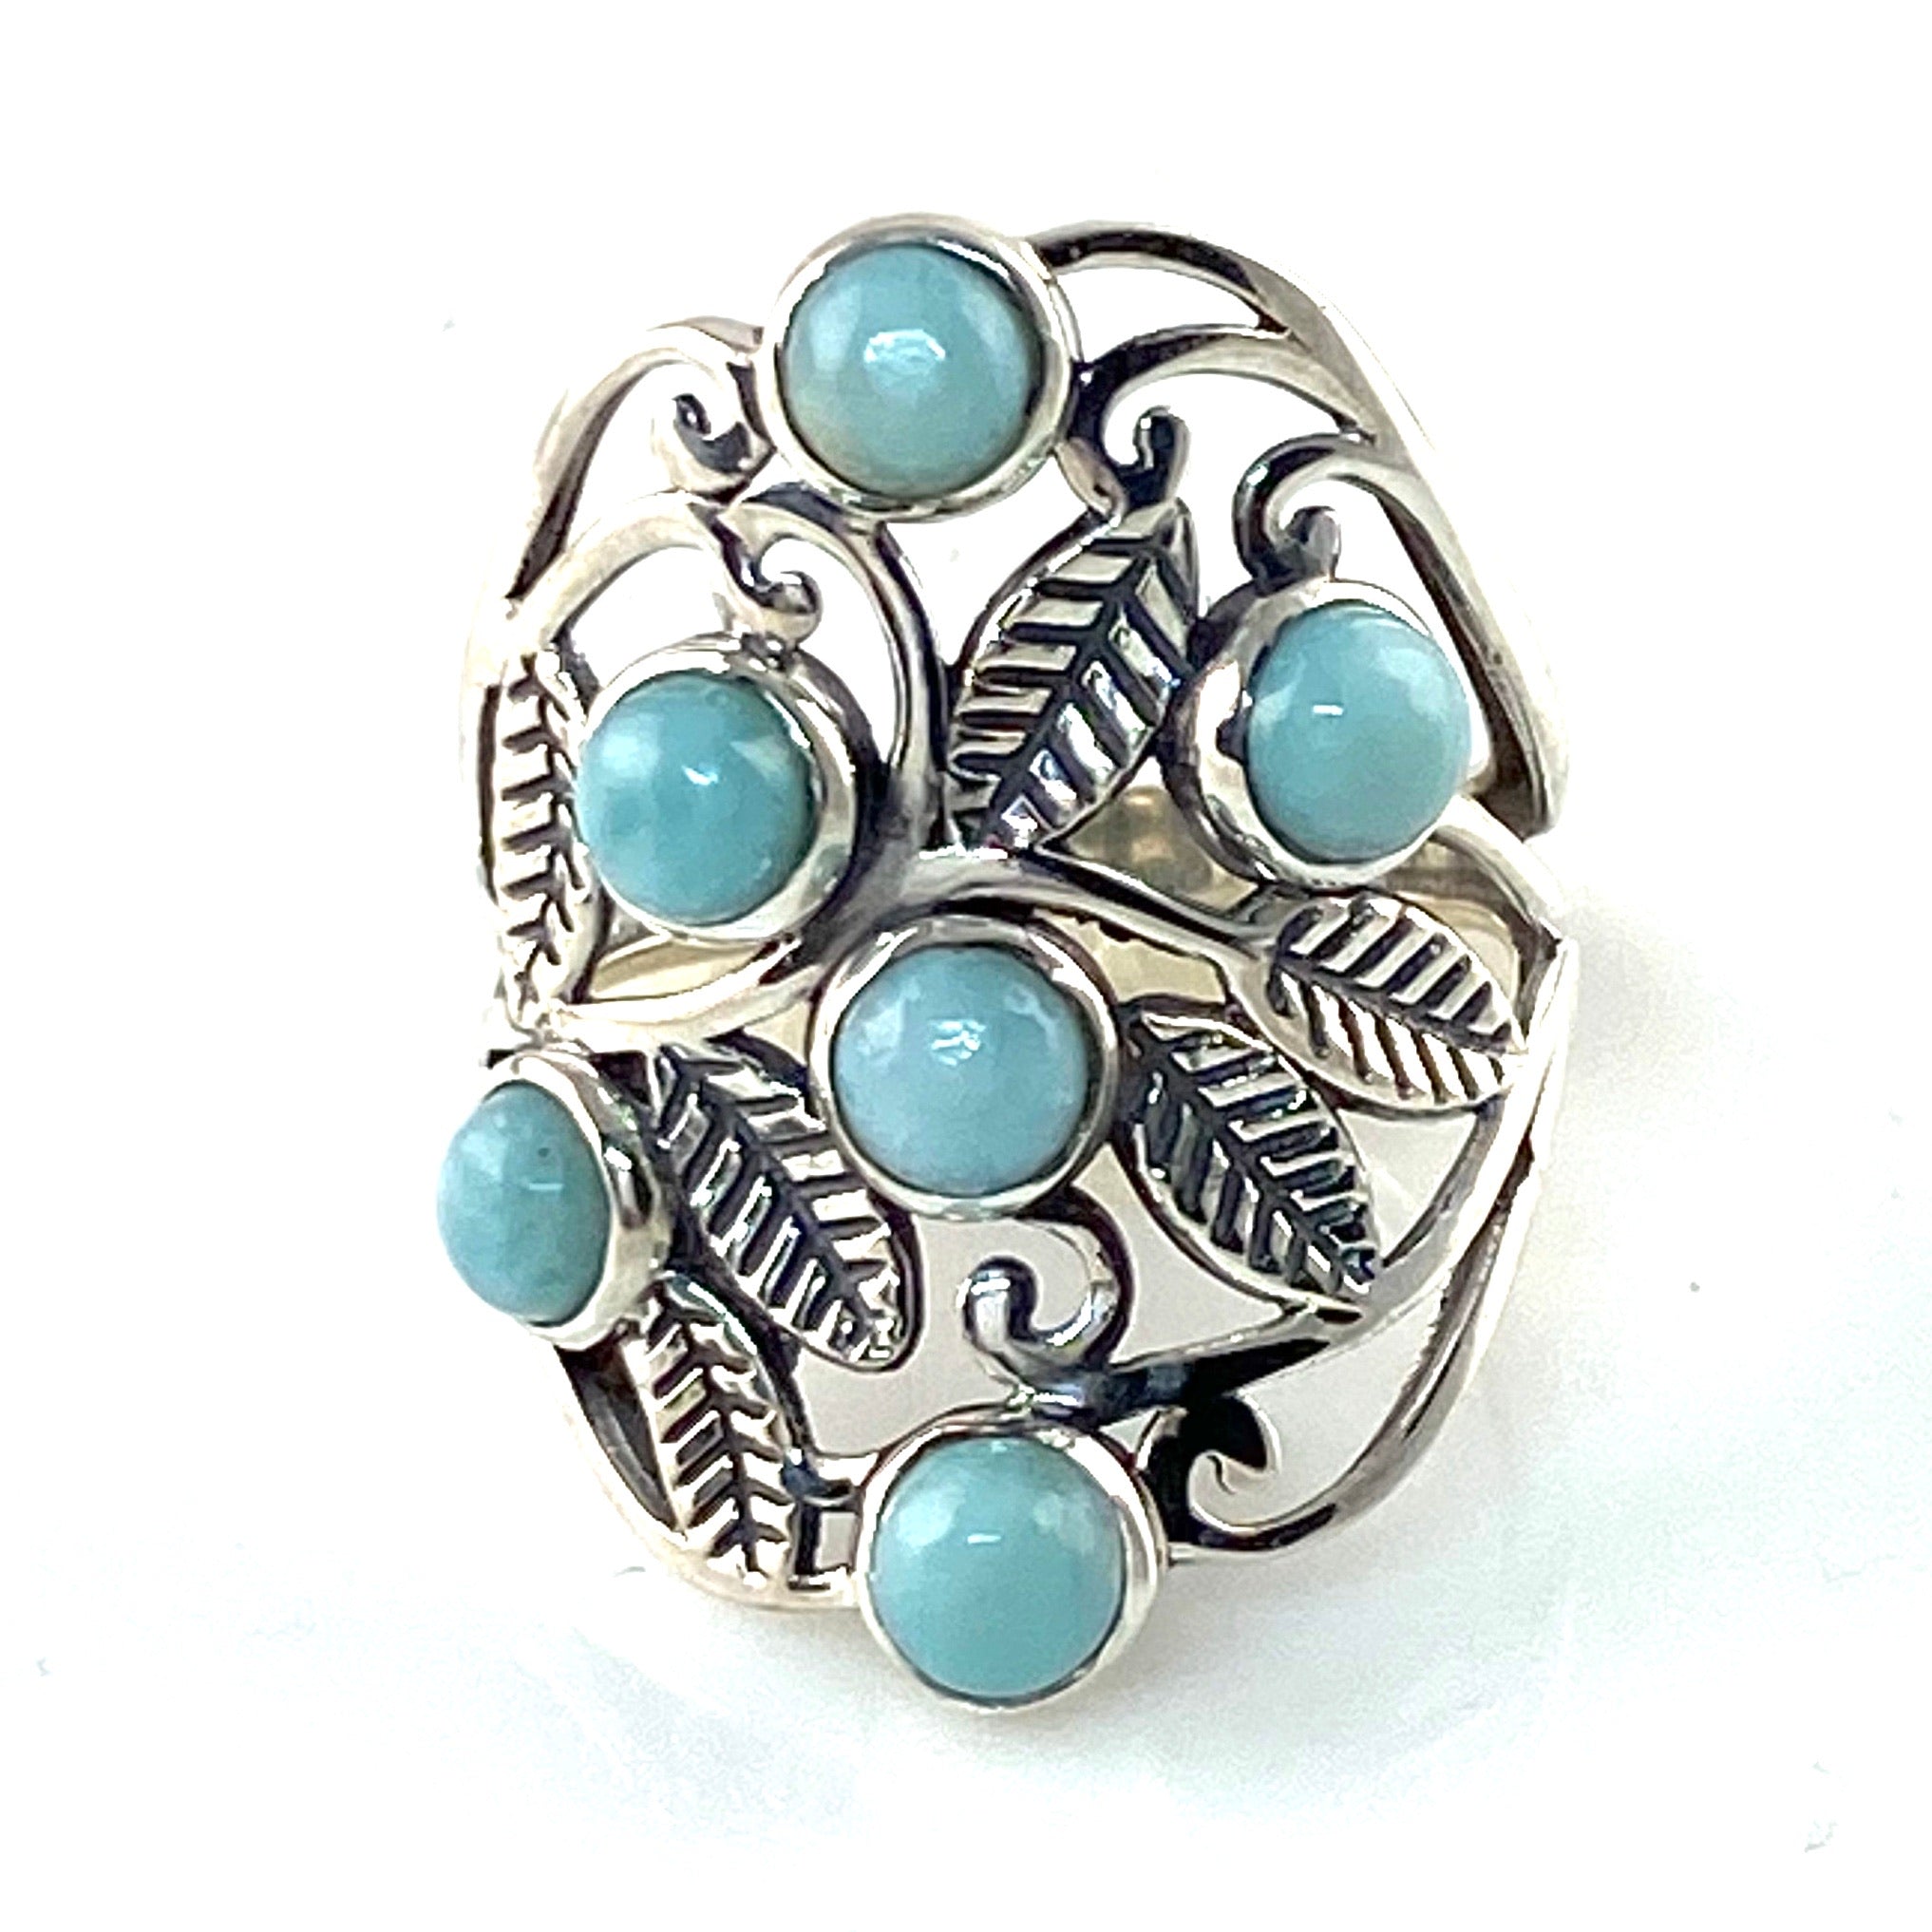 Larimar Sterling Silver Leaf Vine Ring - Keja Designs Jewelry